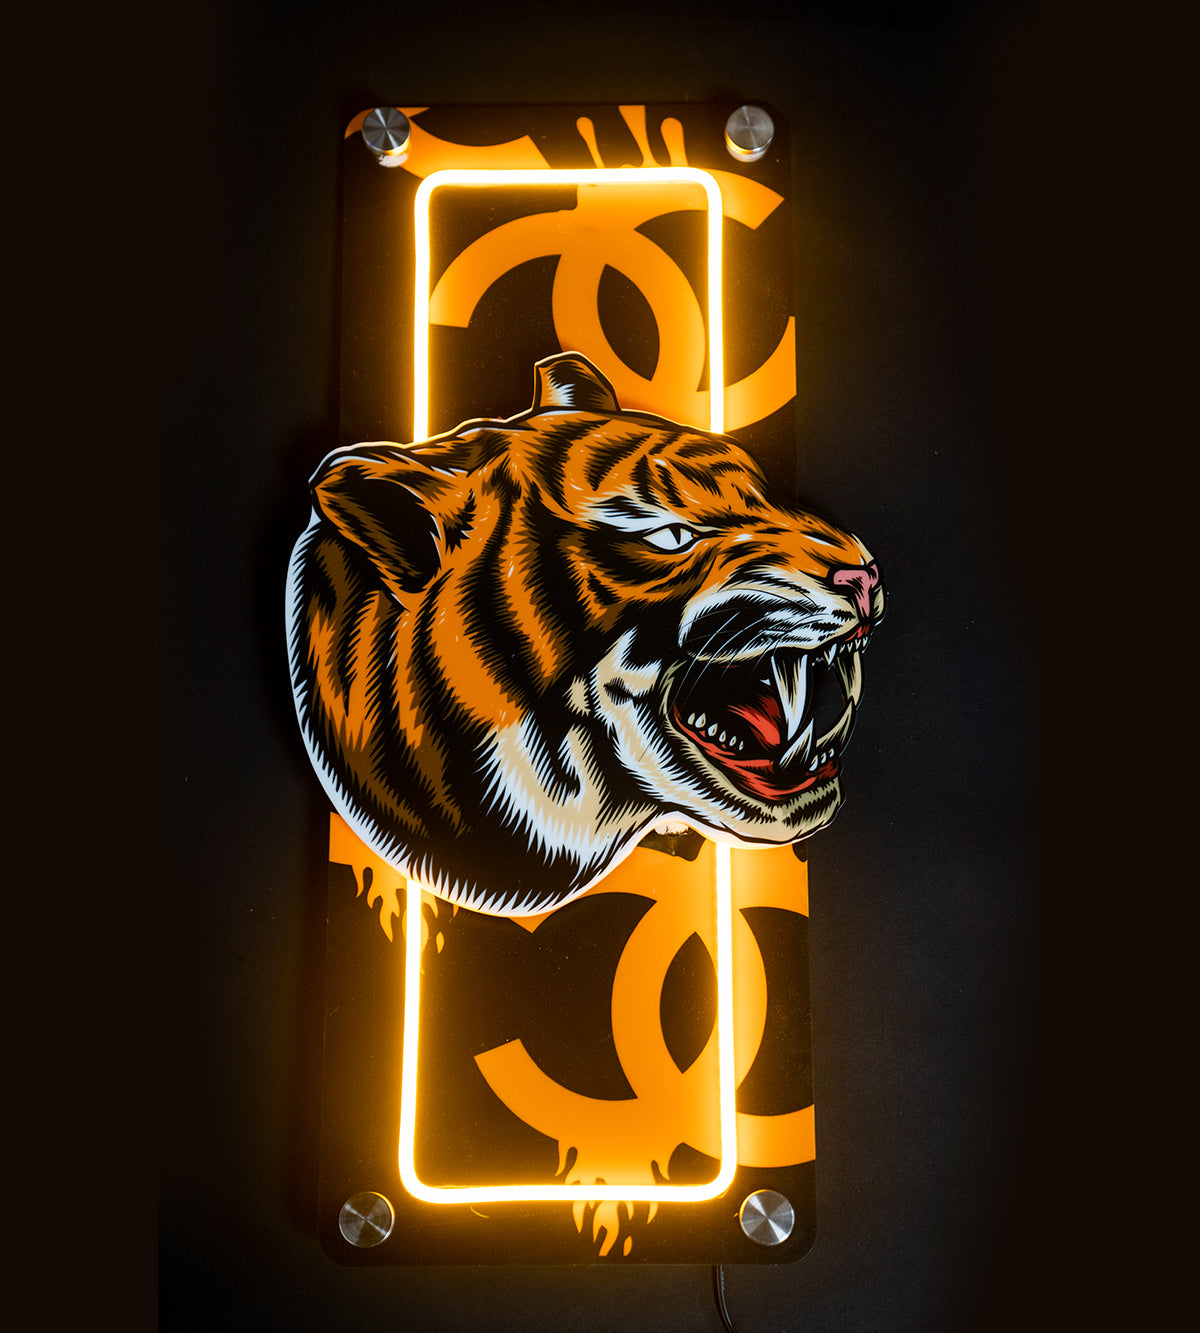 Bengal Tiger LED - Acrylic Wall Art